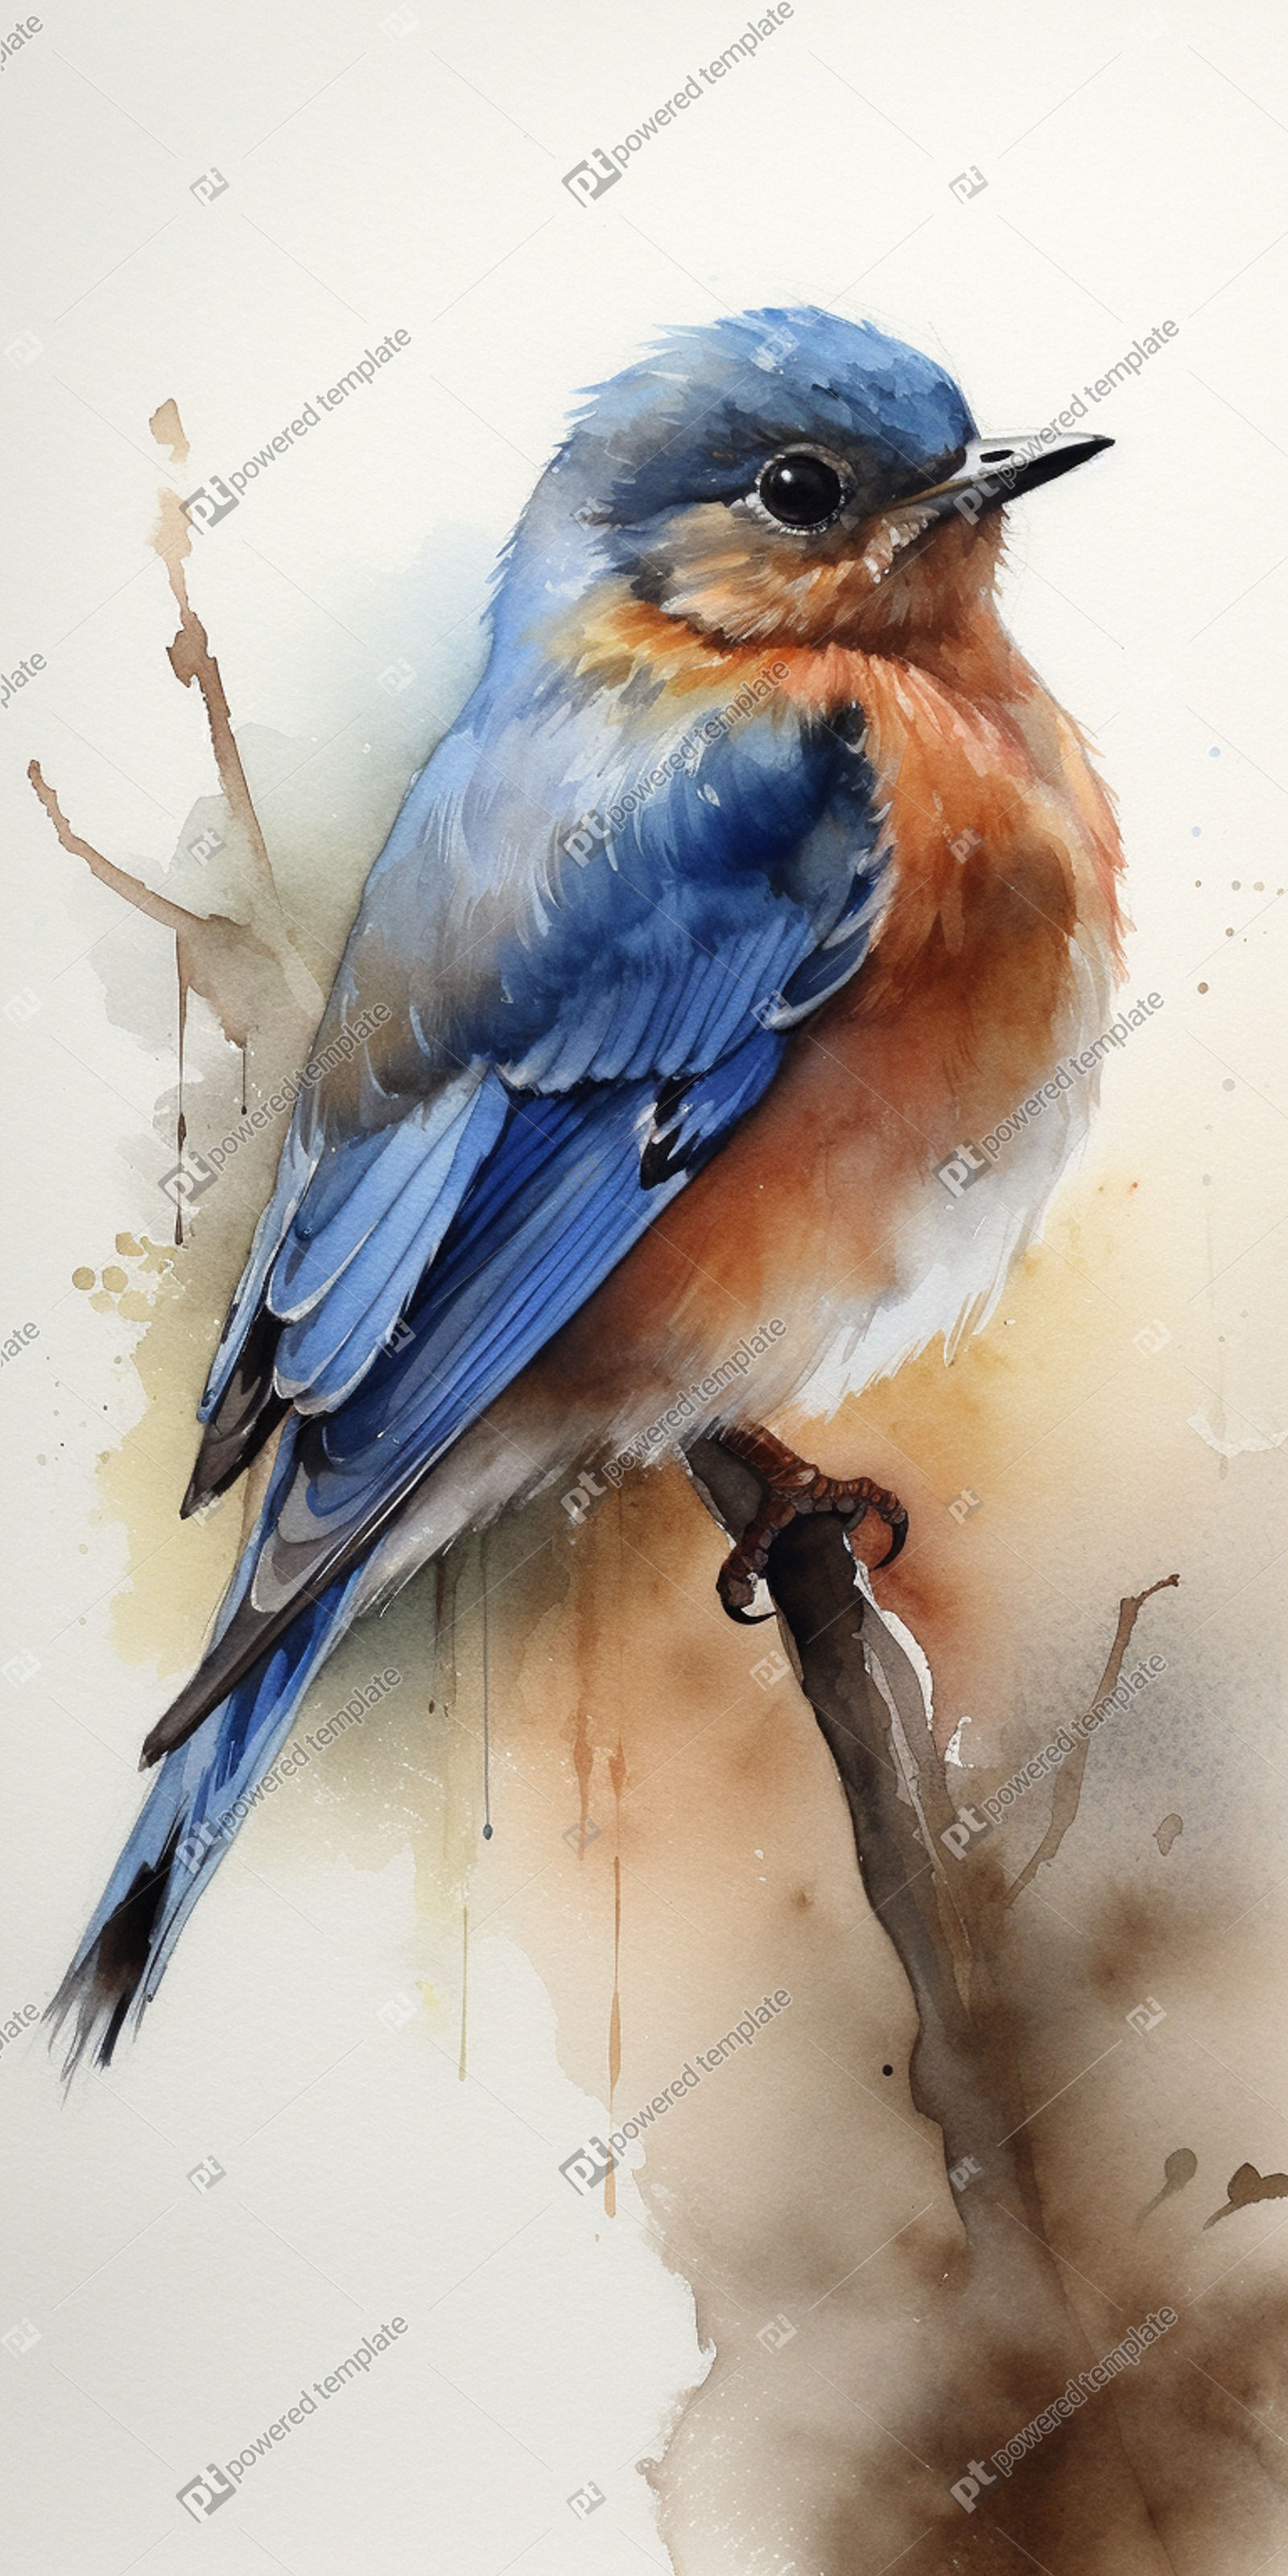 Modeling Paste - Bluebird Arts